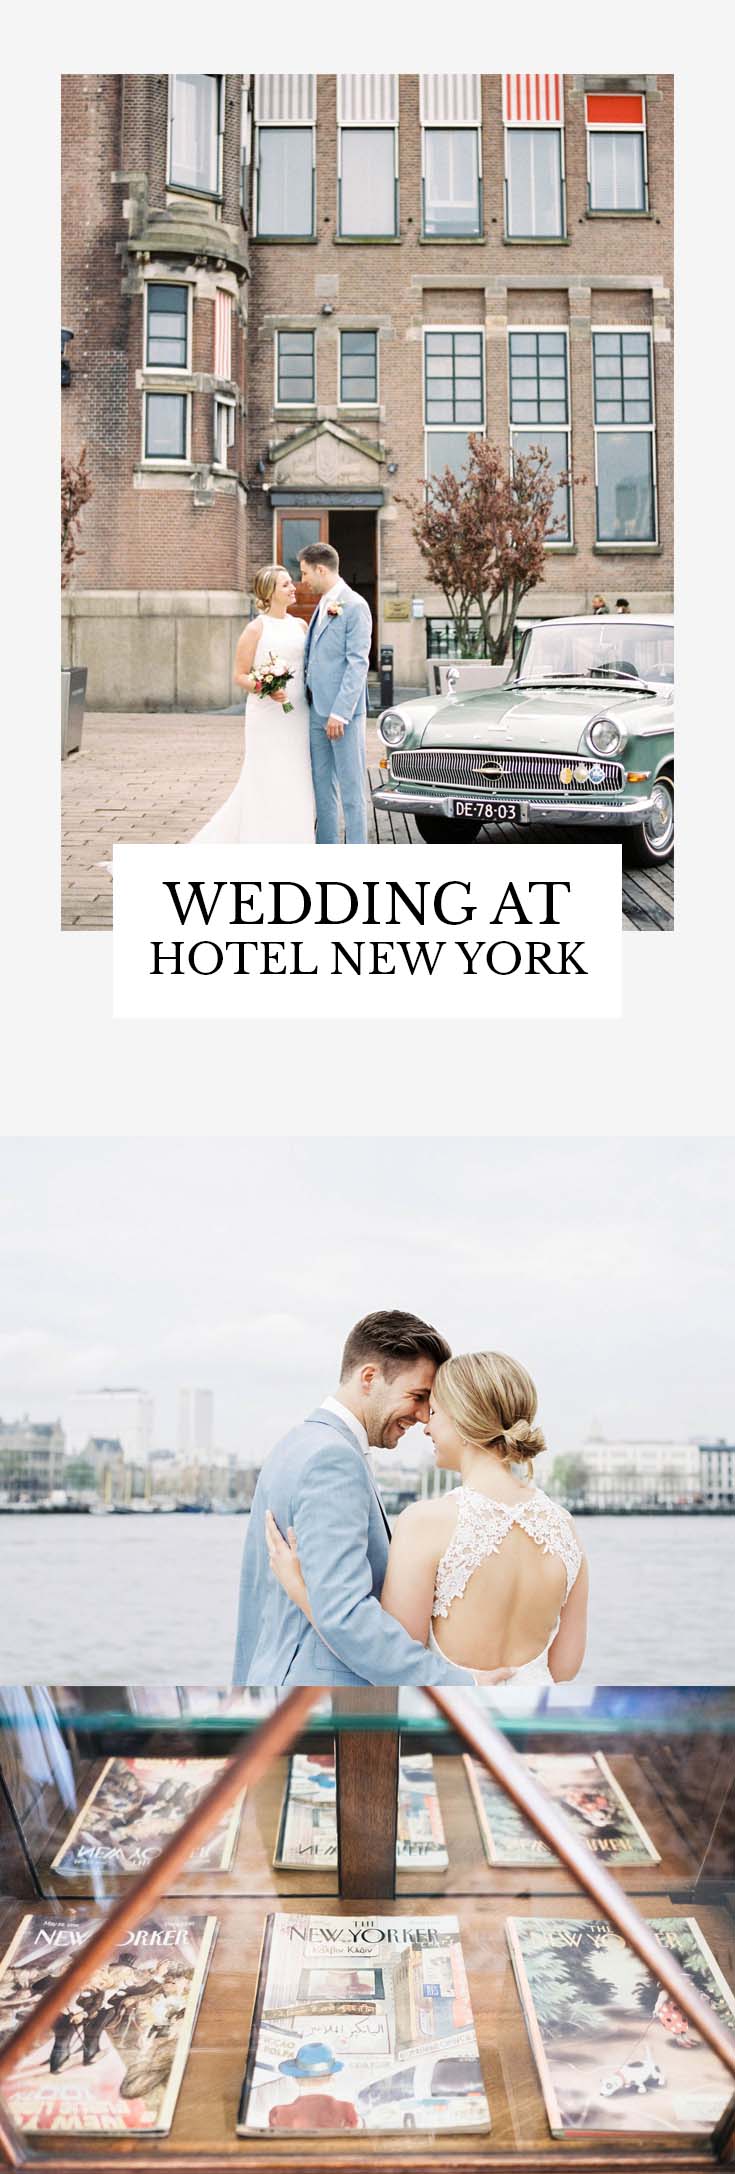 Wedding at hotel New York